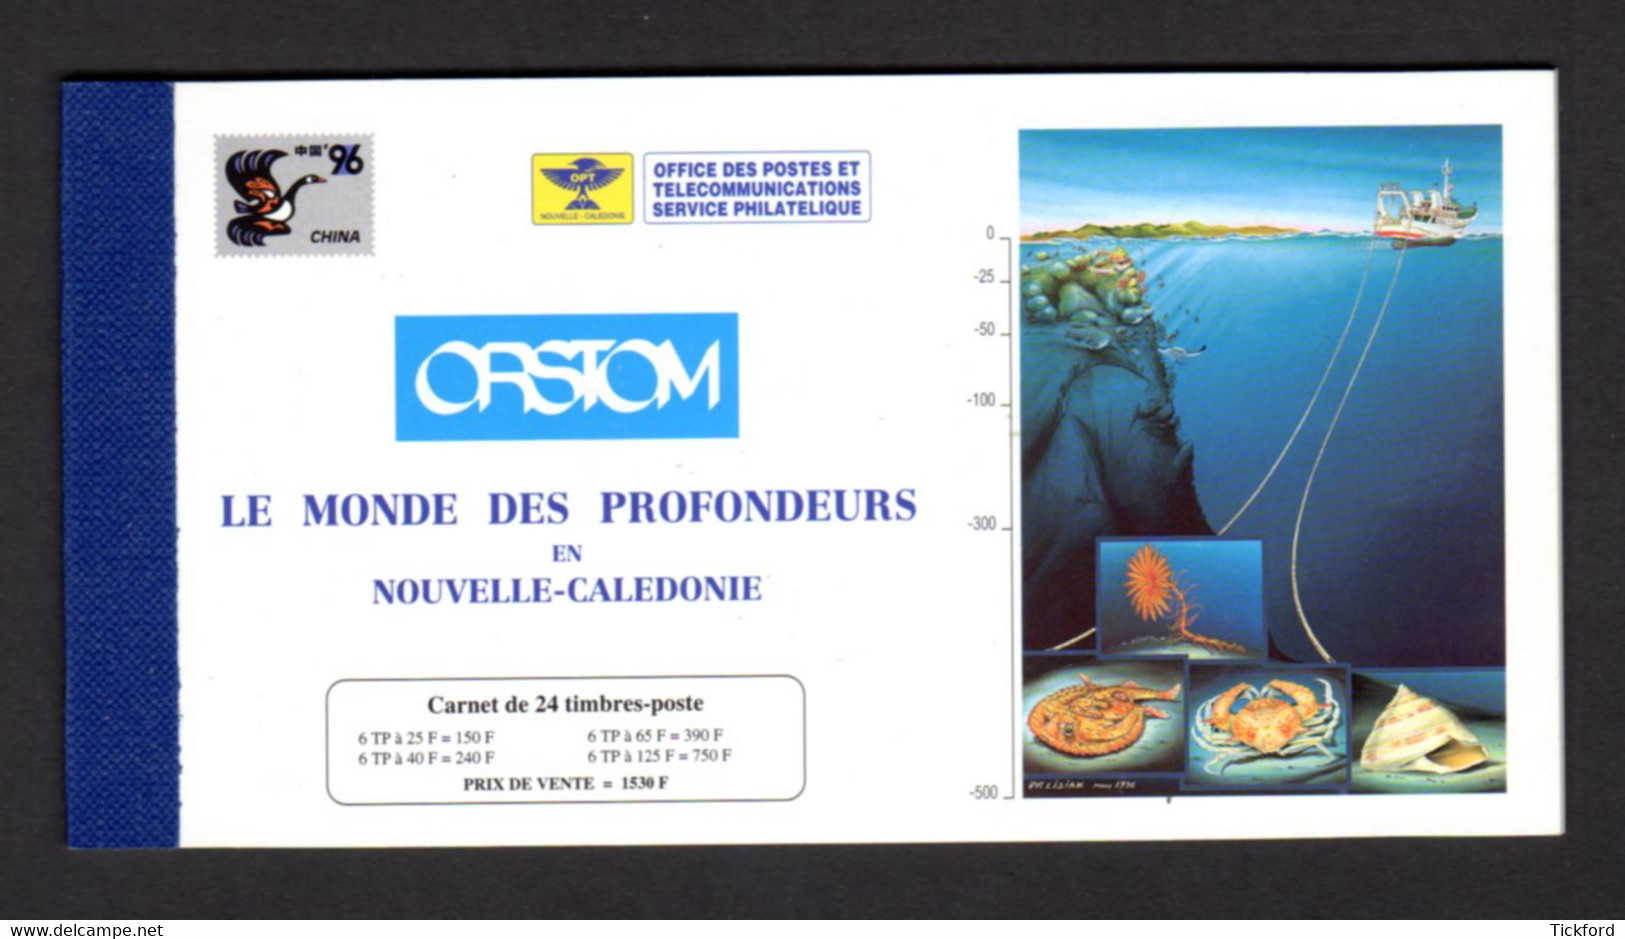 NOUVELLE CALEDONIE 1996 - Yvert N° C710 - Neuf ** / MNH - Orstom, Le Monde Des Profondeurs - Carnets